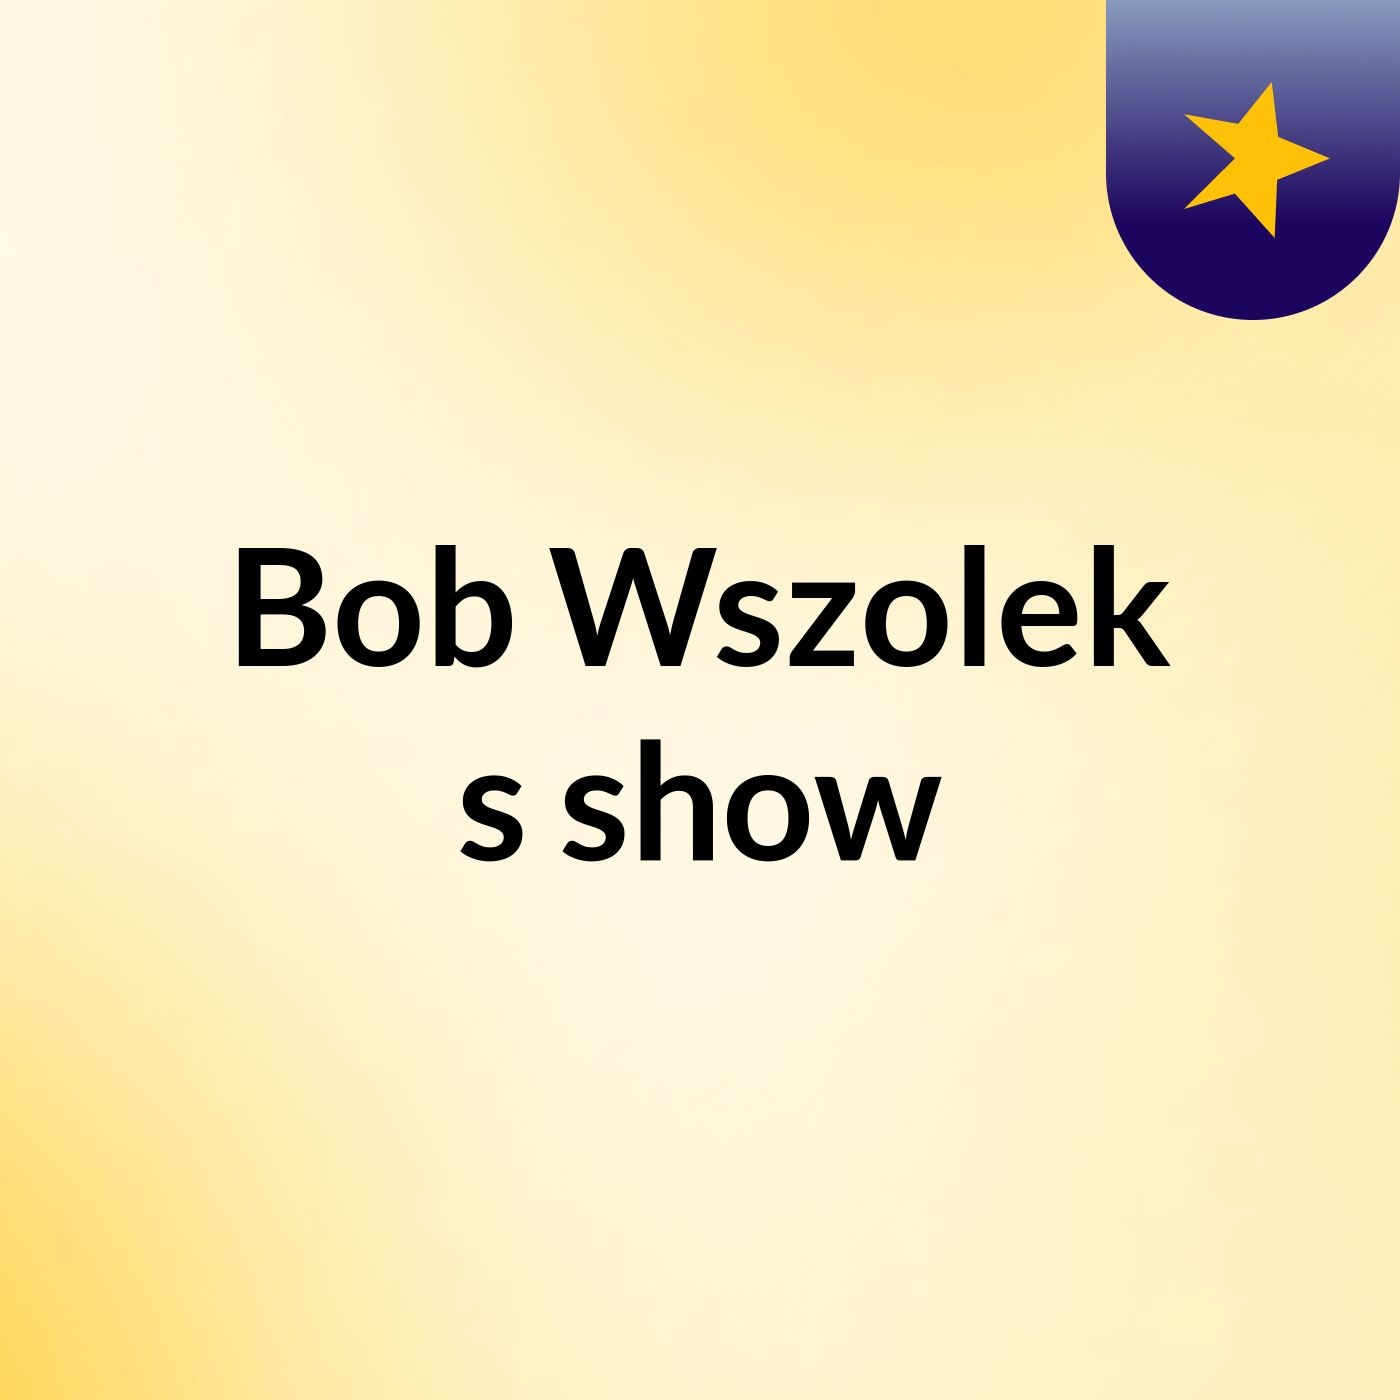 Bob Wszolek's show